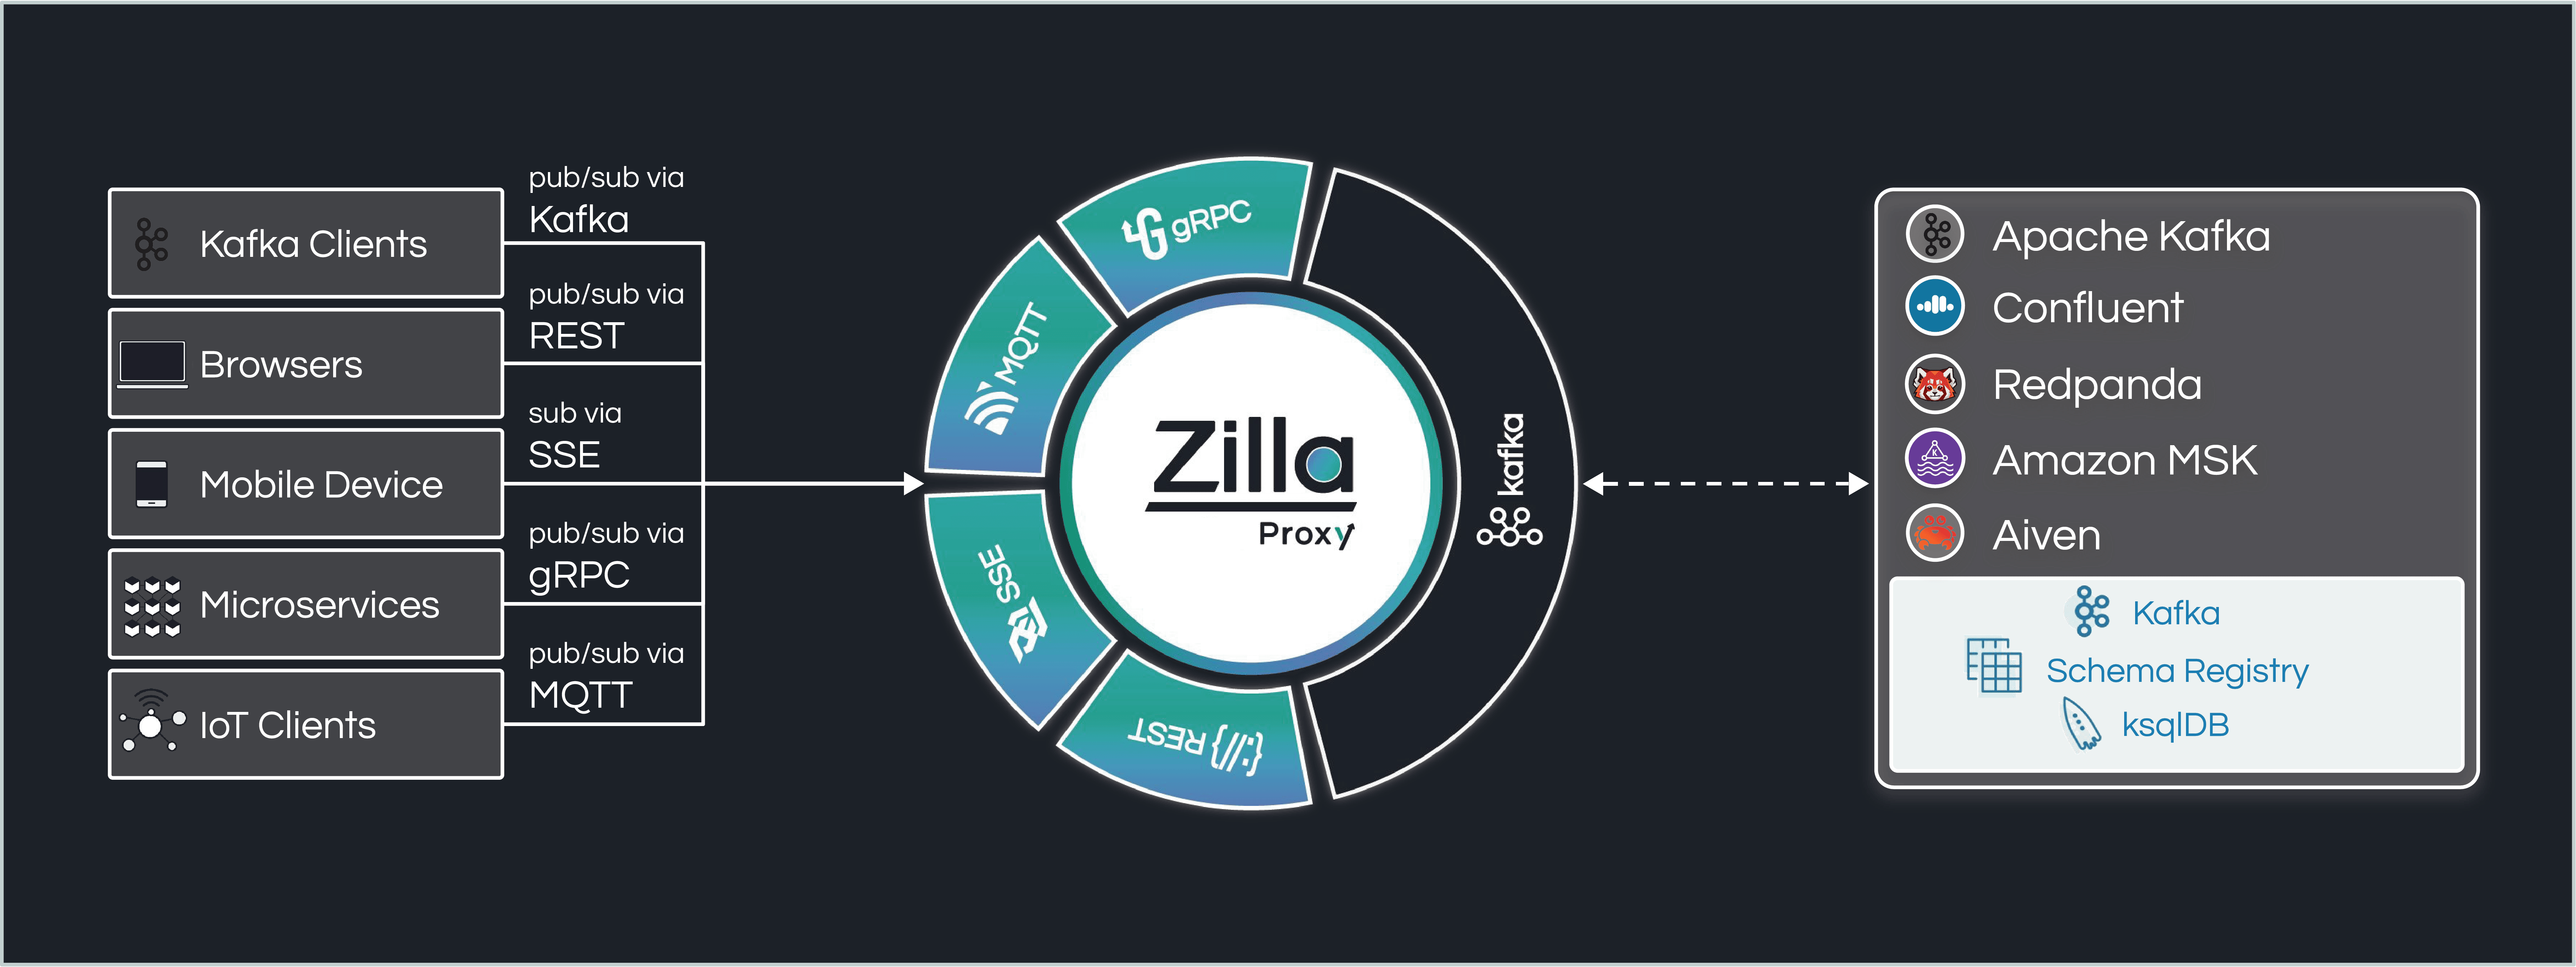 Zilla Overview